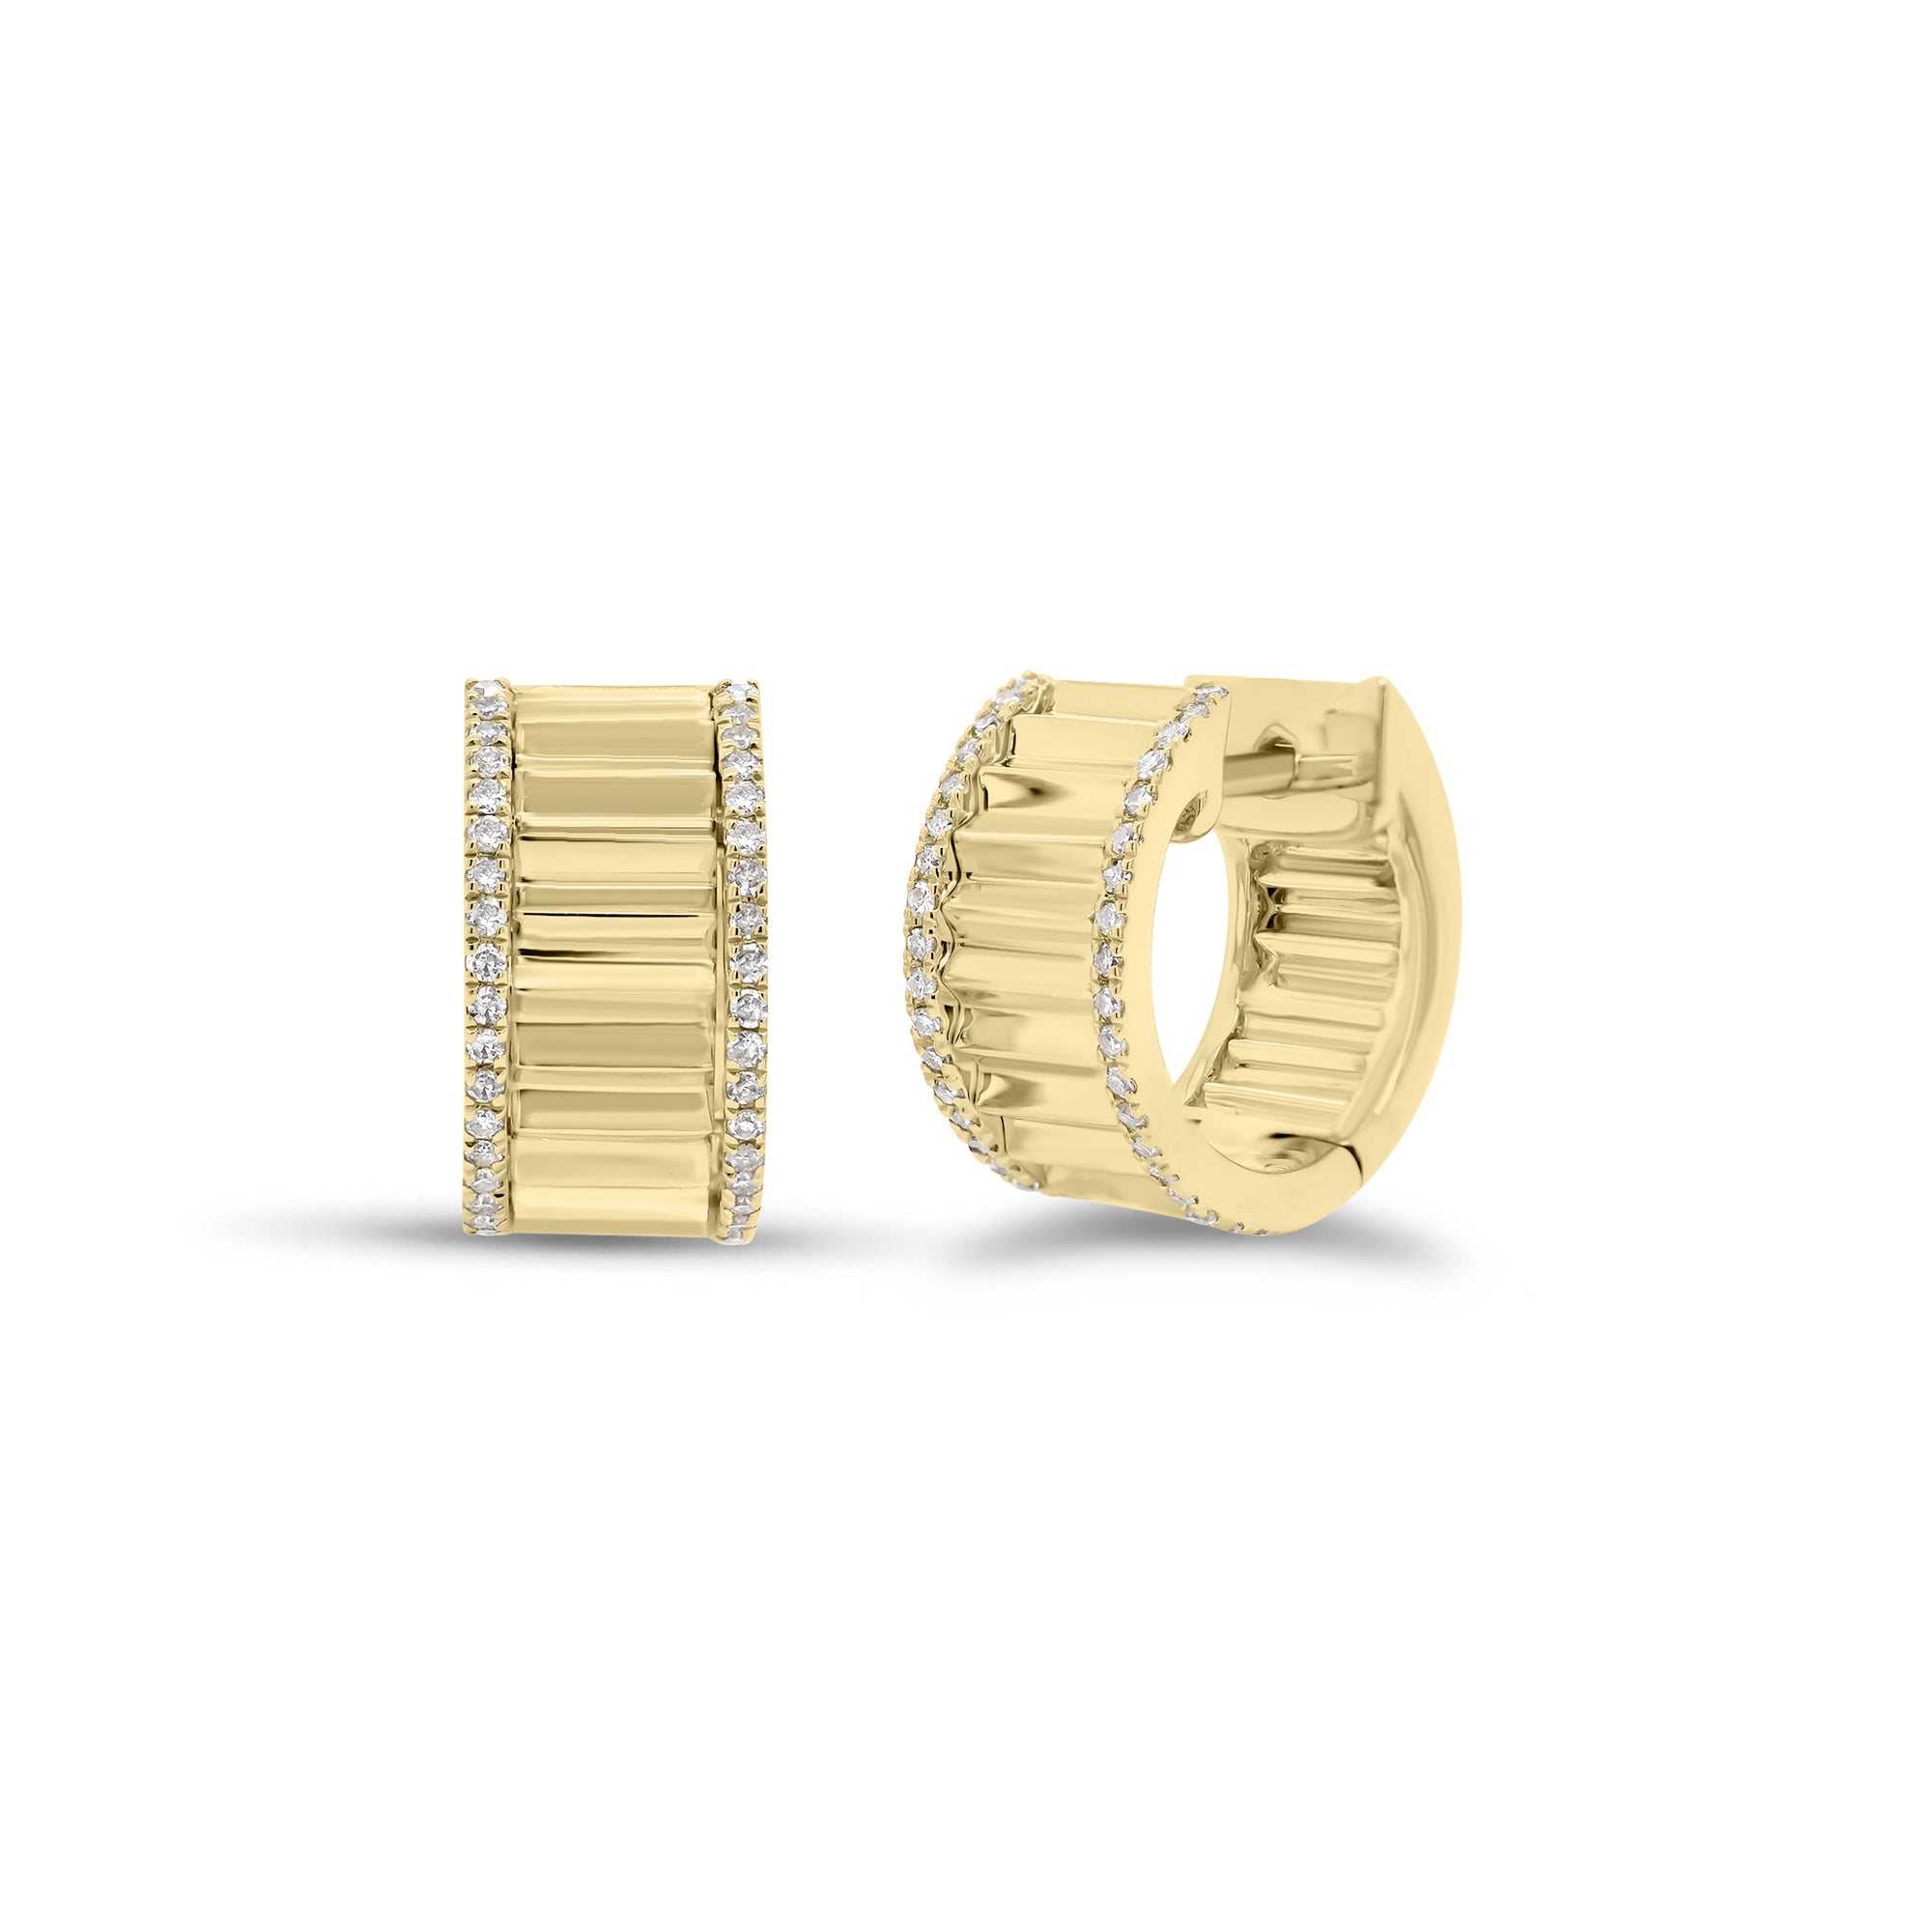 Diamond wide ridged huggie earrings - 14K gold weighing 4.45 grams  - 76 round diamonds totaling 0.16 carats